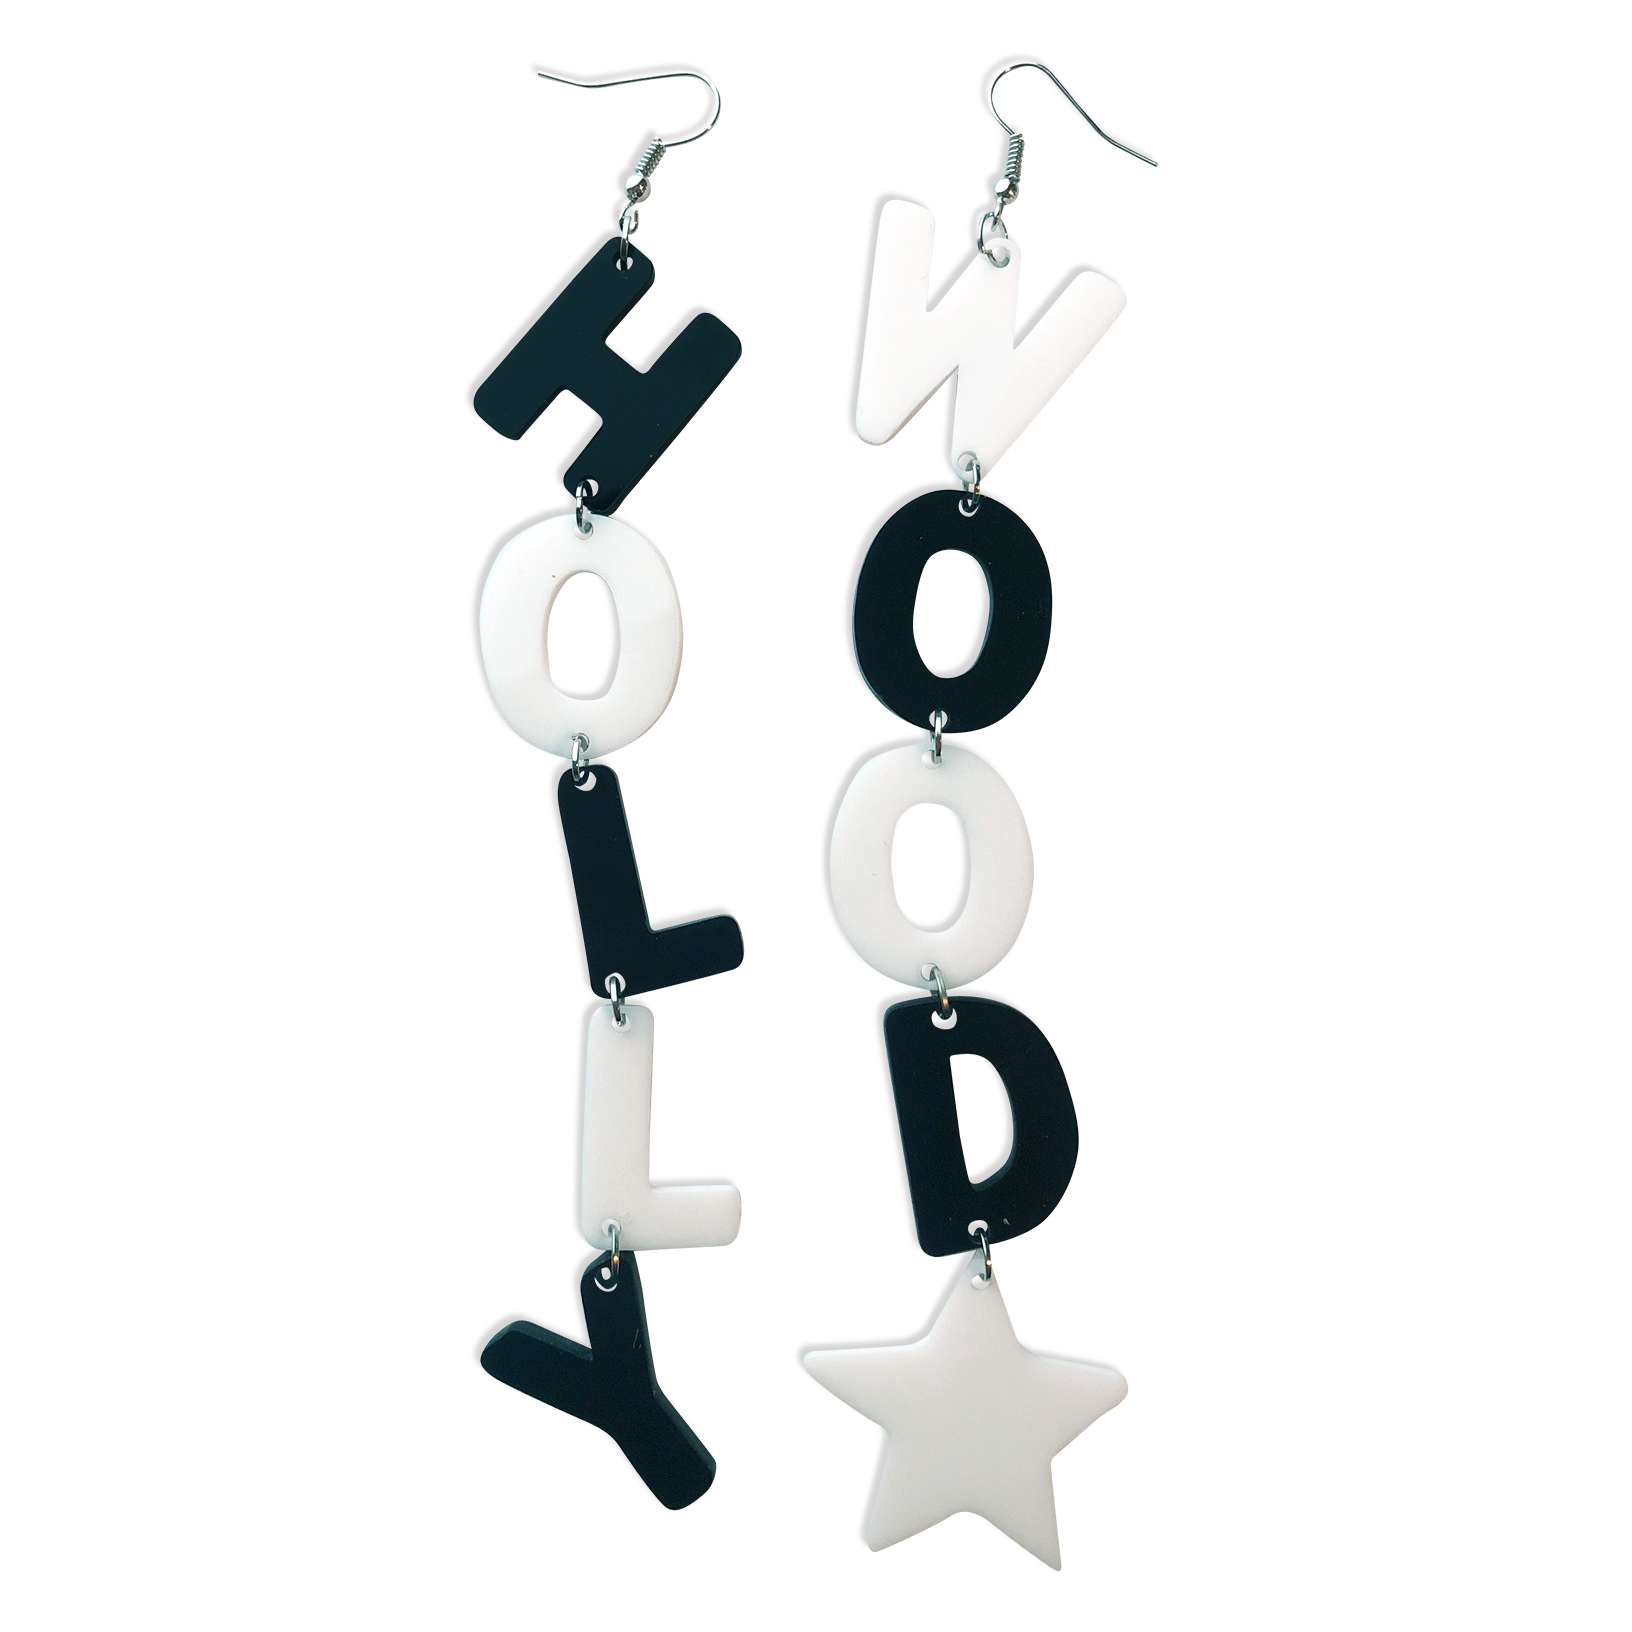 B&W HOLLYWOOD STAR EARRINGS (4380453601363)